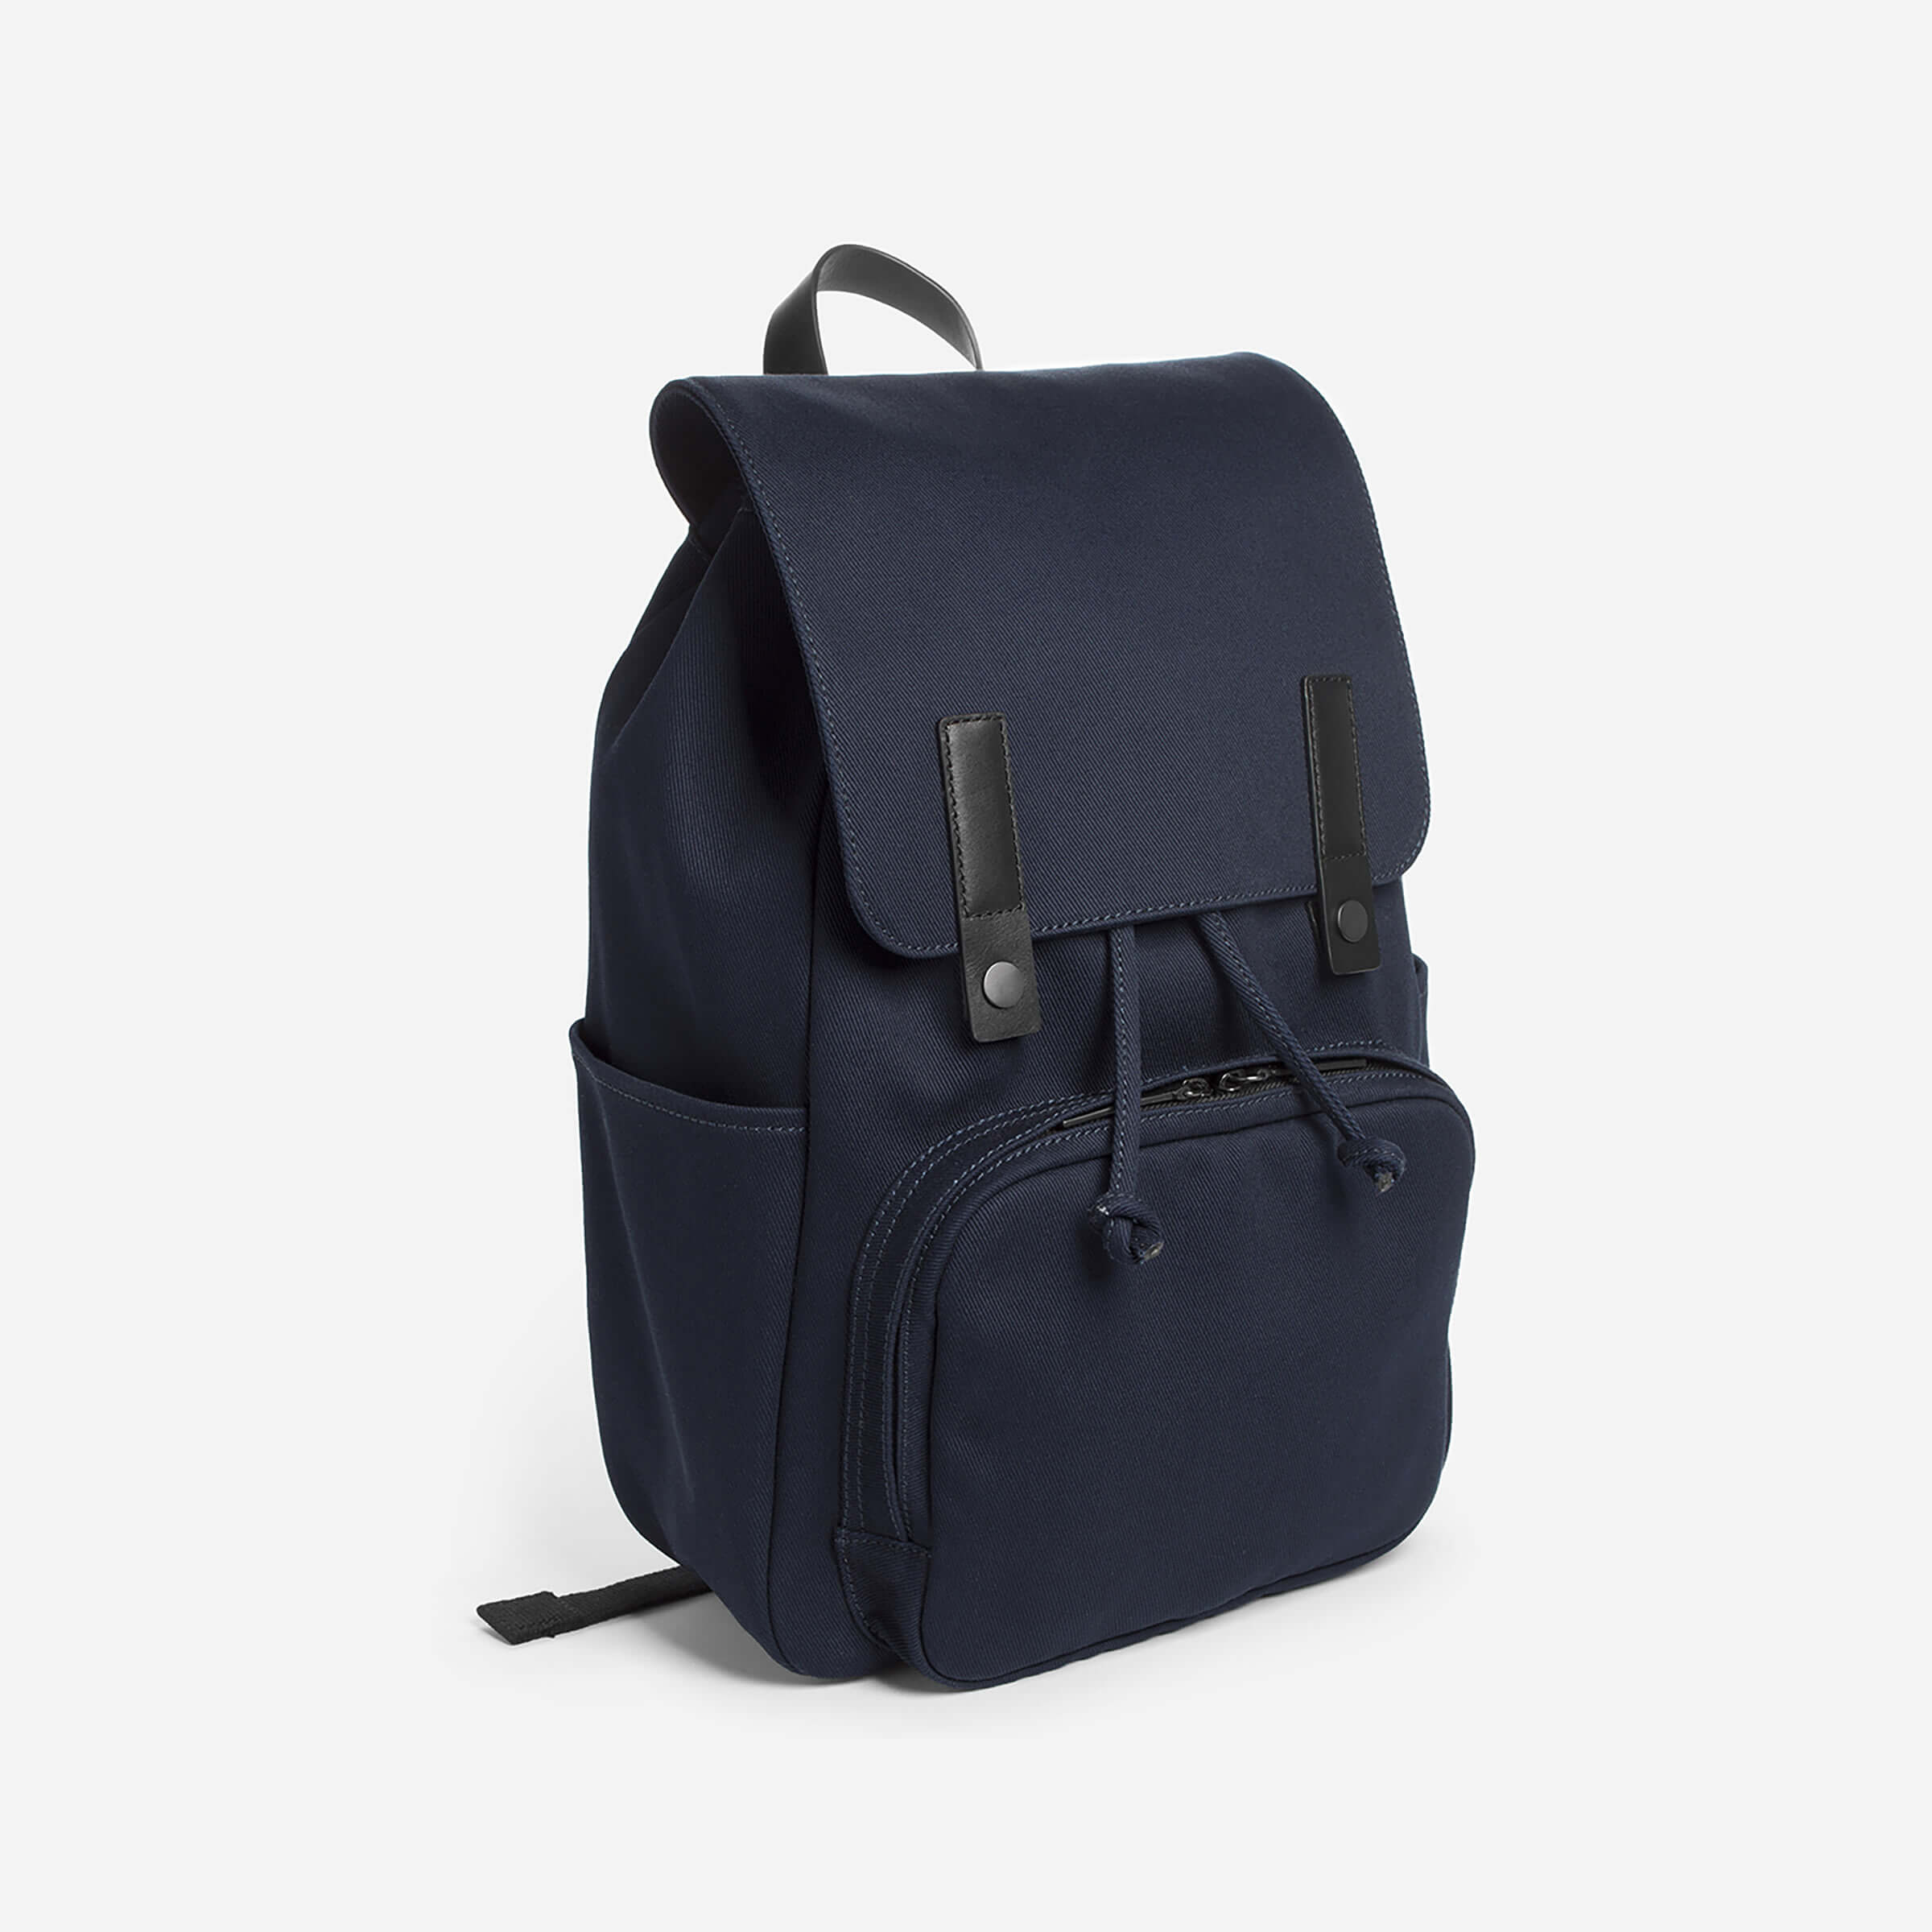 ladies business laptop backpack